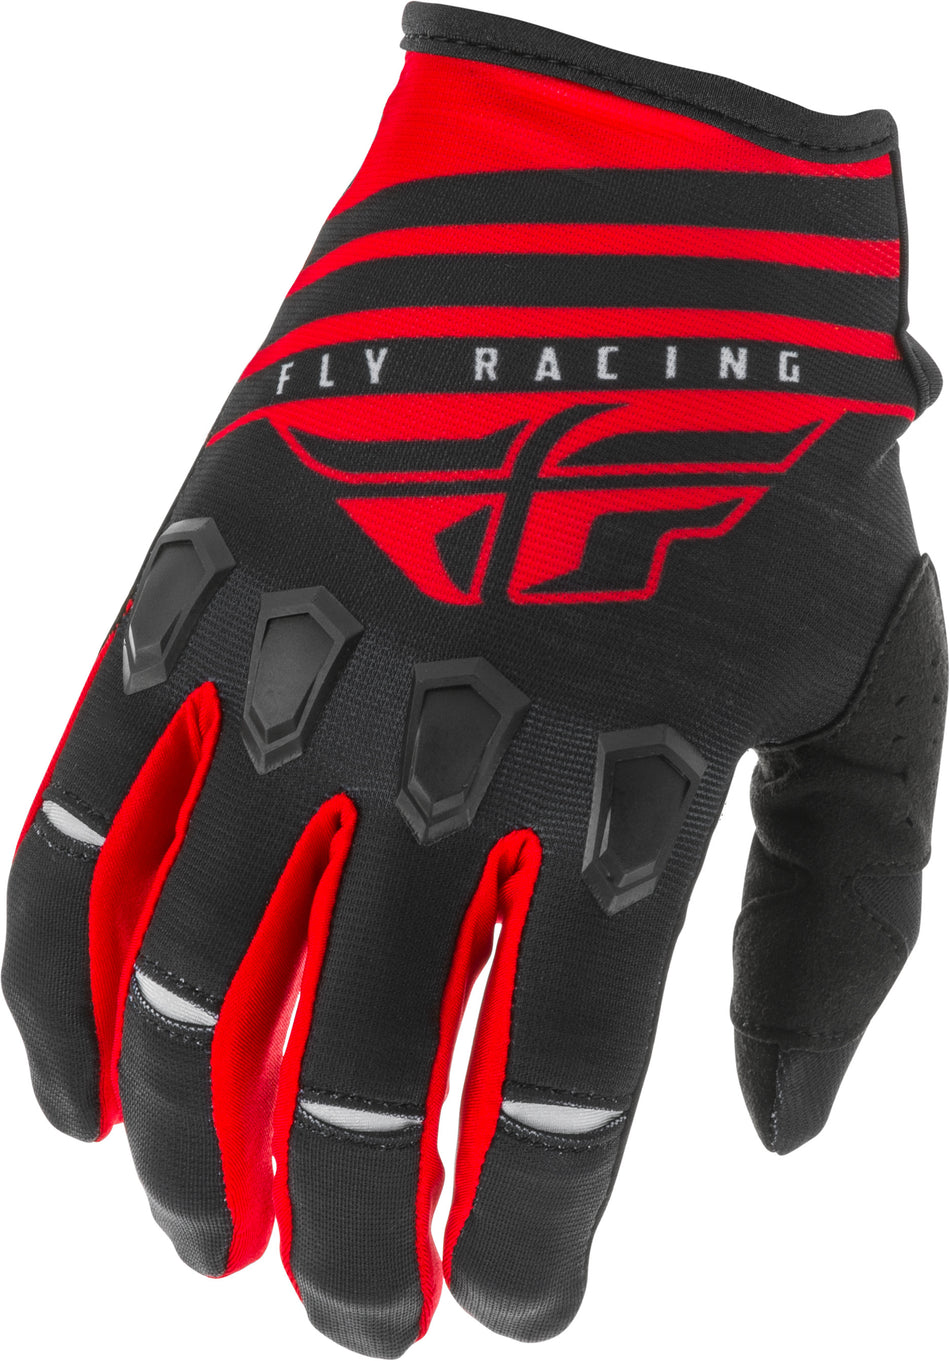 FLY RACING Kinetic K220 Gloves Red/Black/White Sz 08 373-51308